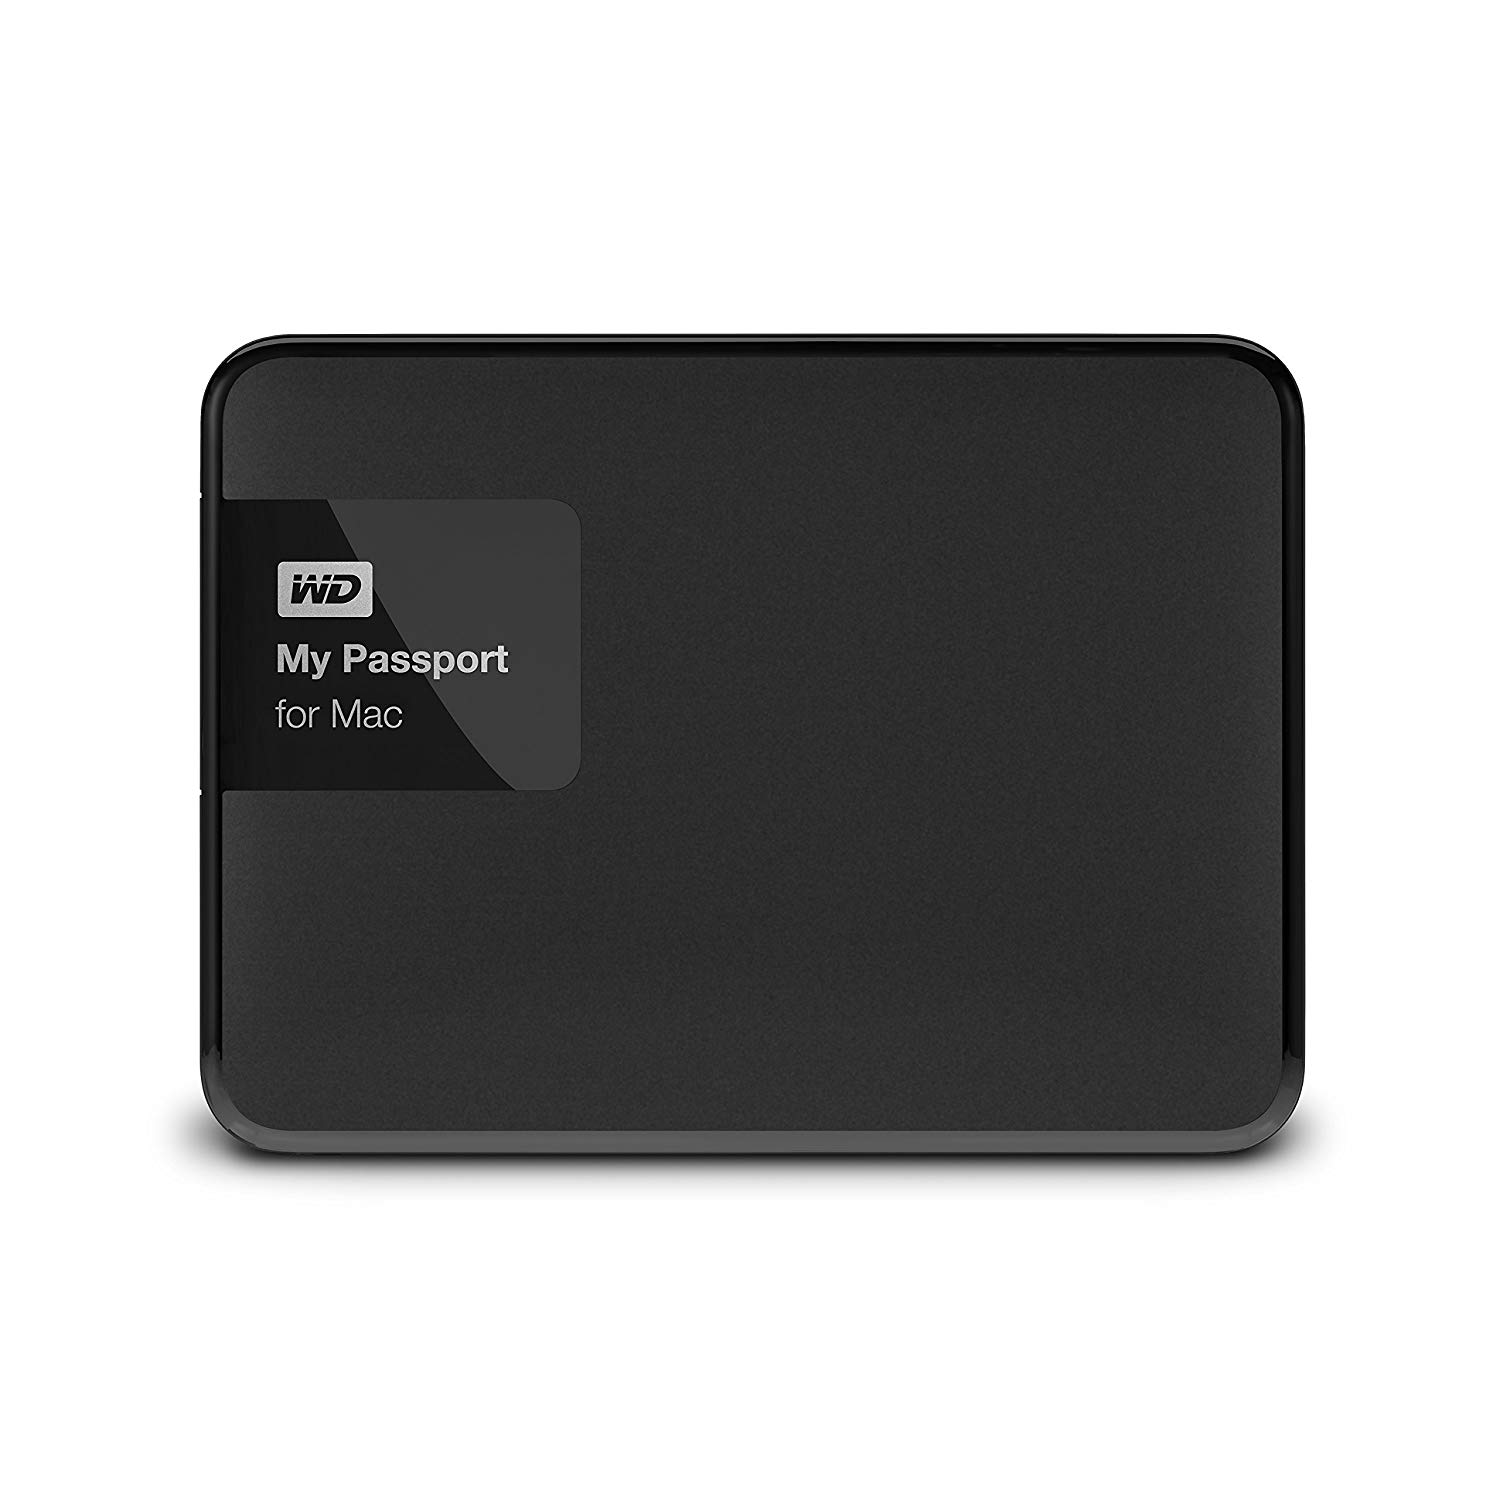 Wd 1tb Black My Passport For Mac Portable External Hard Drive - Usb 3.0